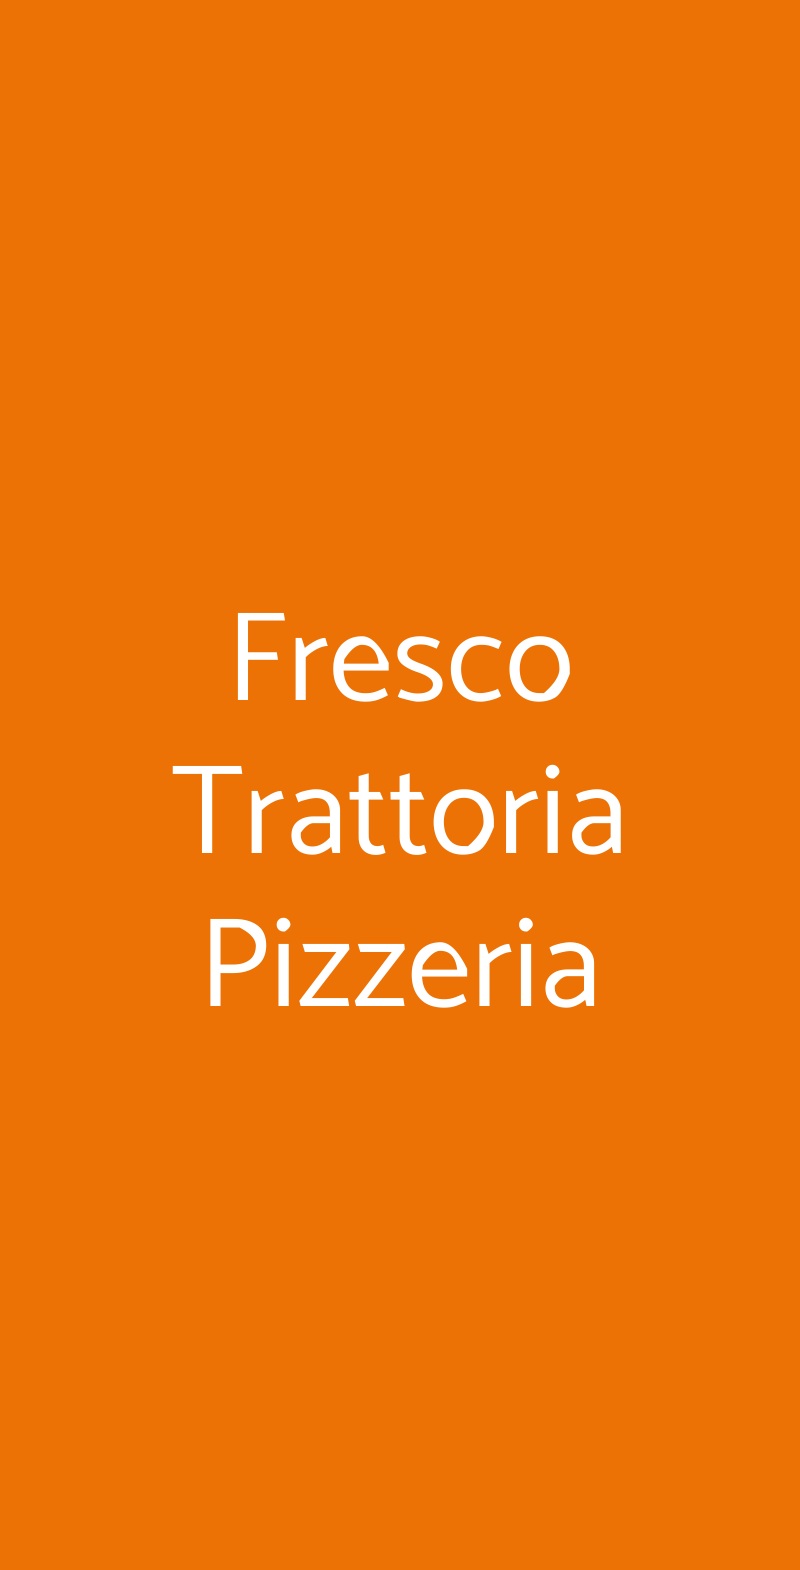 Fresco Trattoria Pizzeria Roma menù 1 pagina